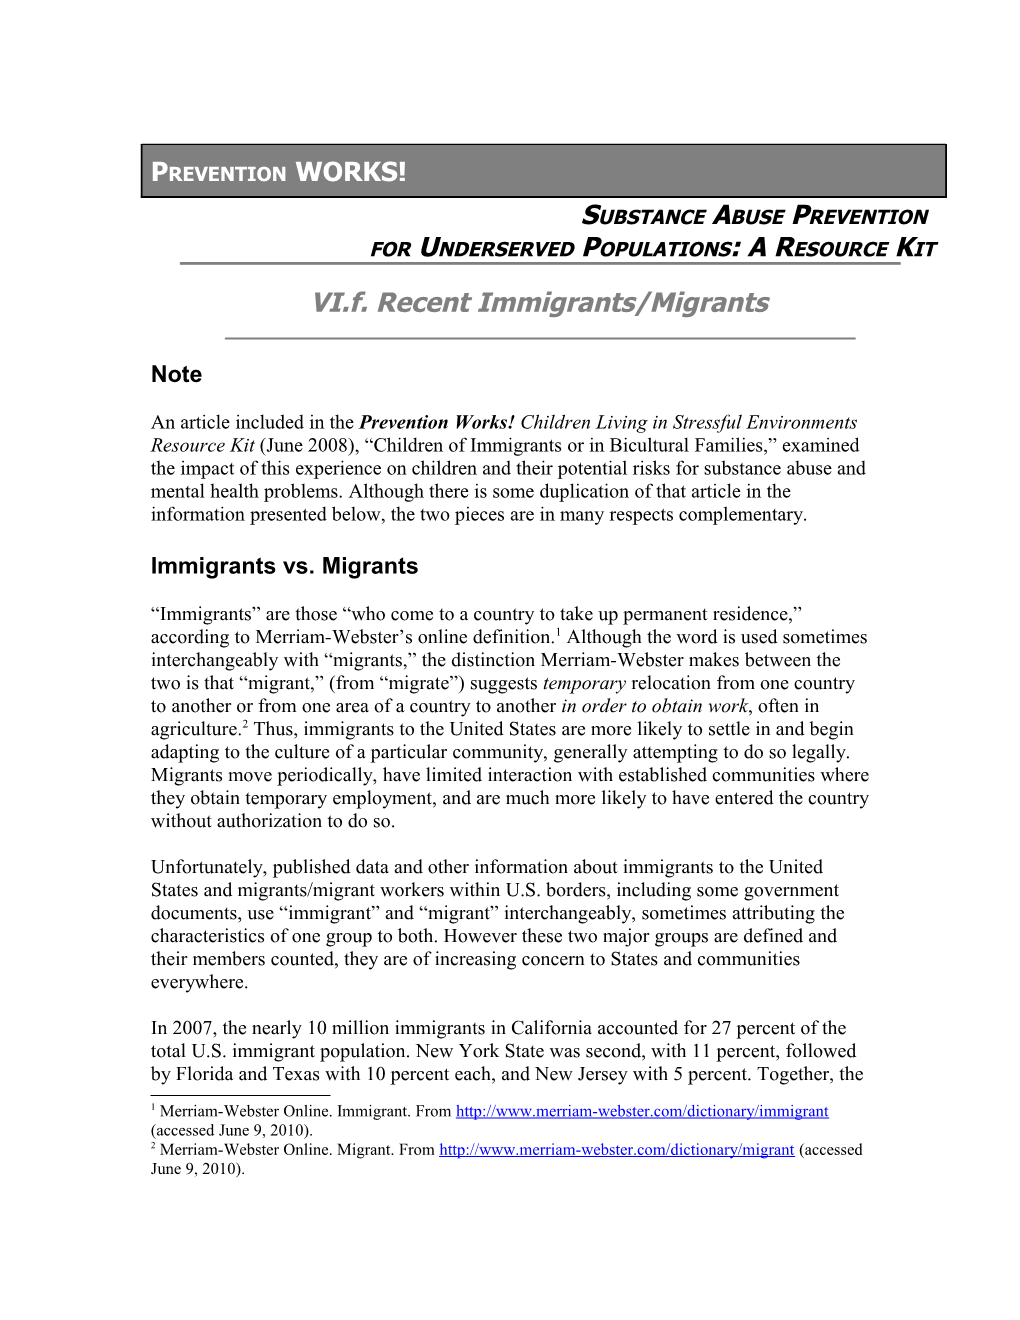 Underserved Populations Resource Kit: Recent Immigrants/Migrants